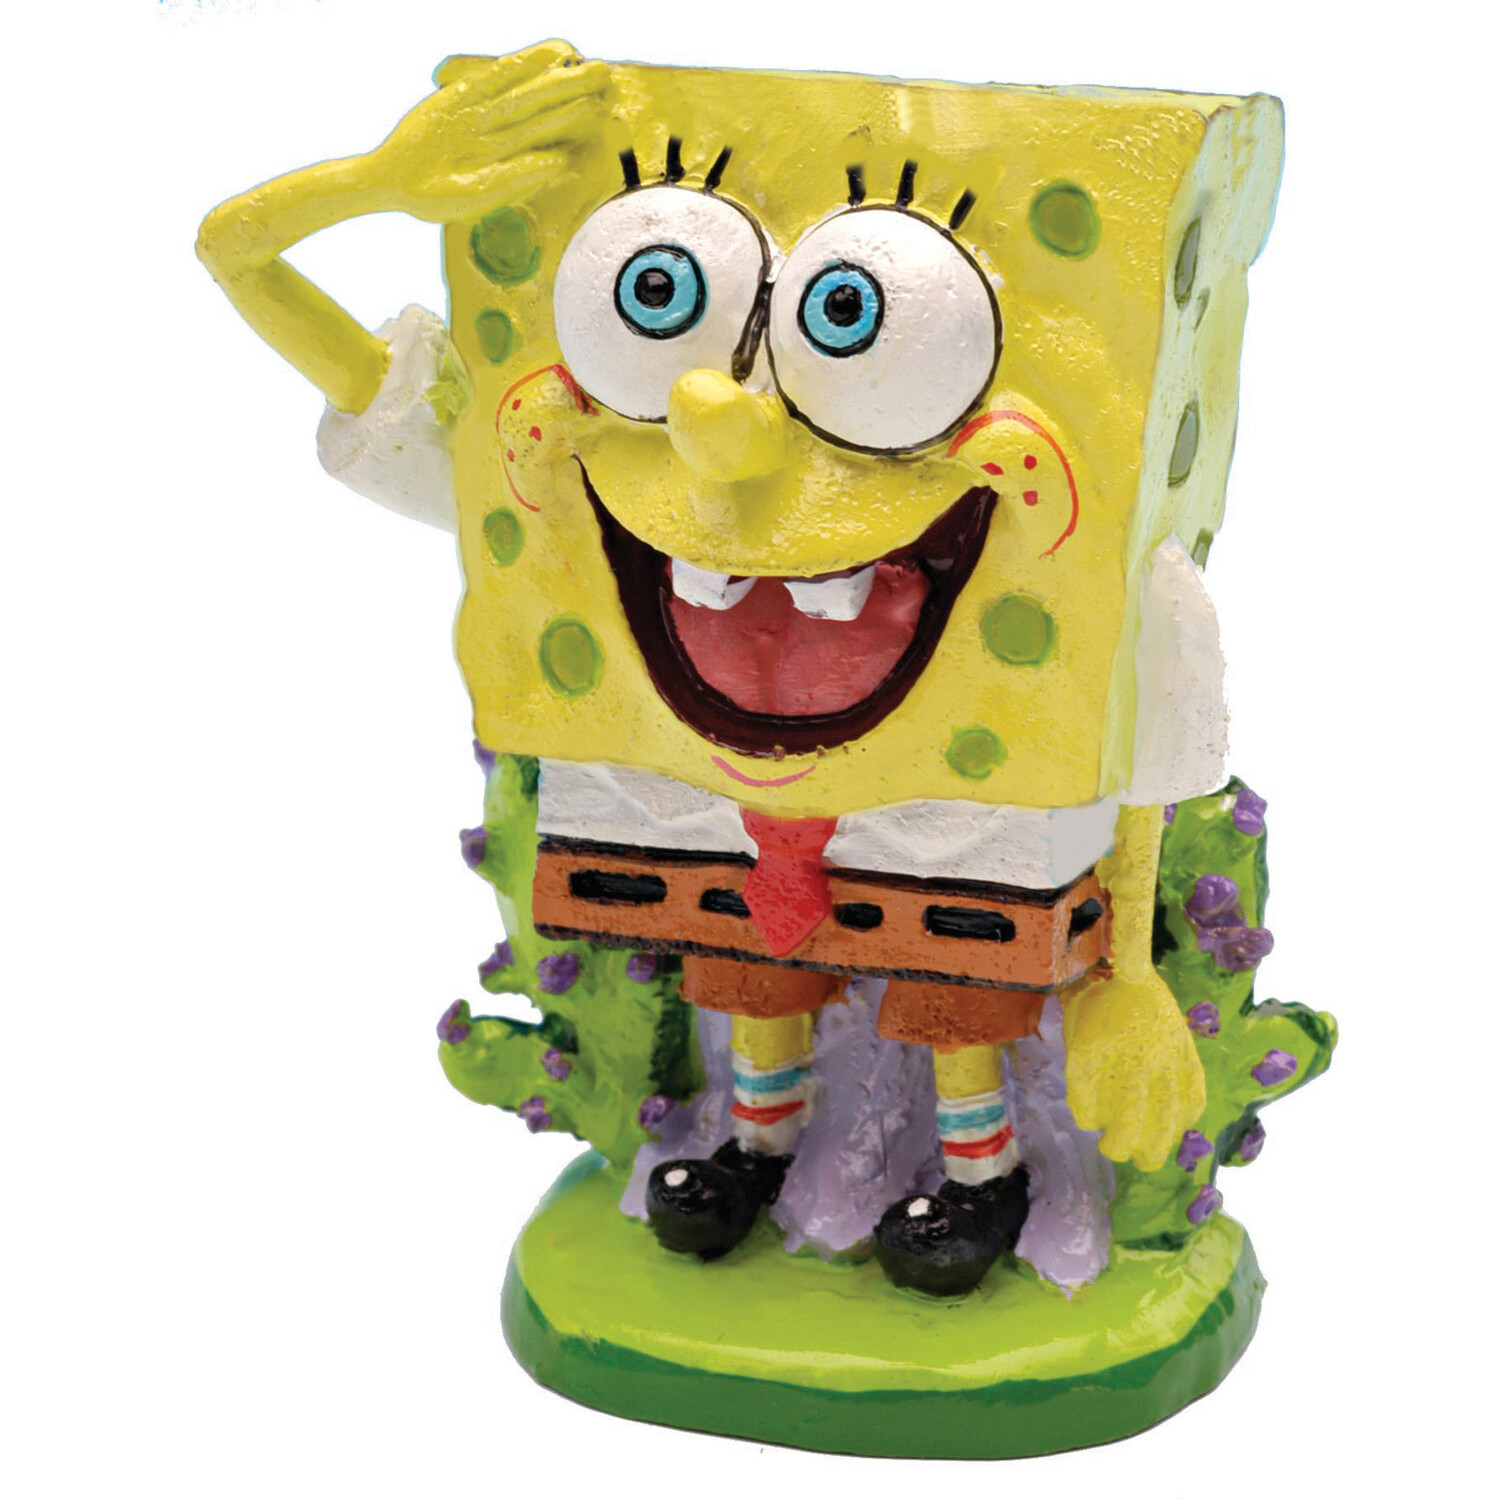 Spongebob Mini Ornament Image 2